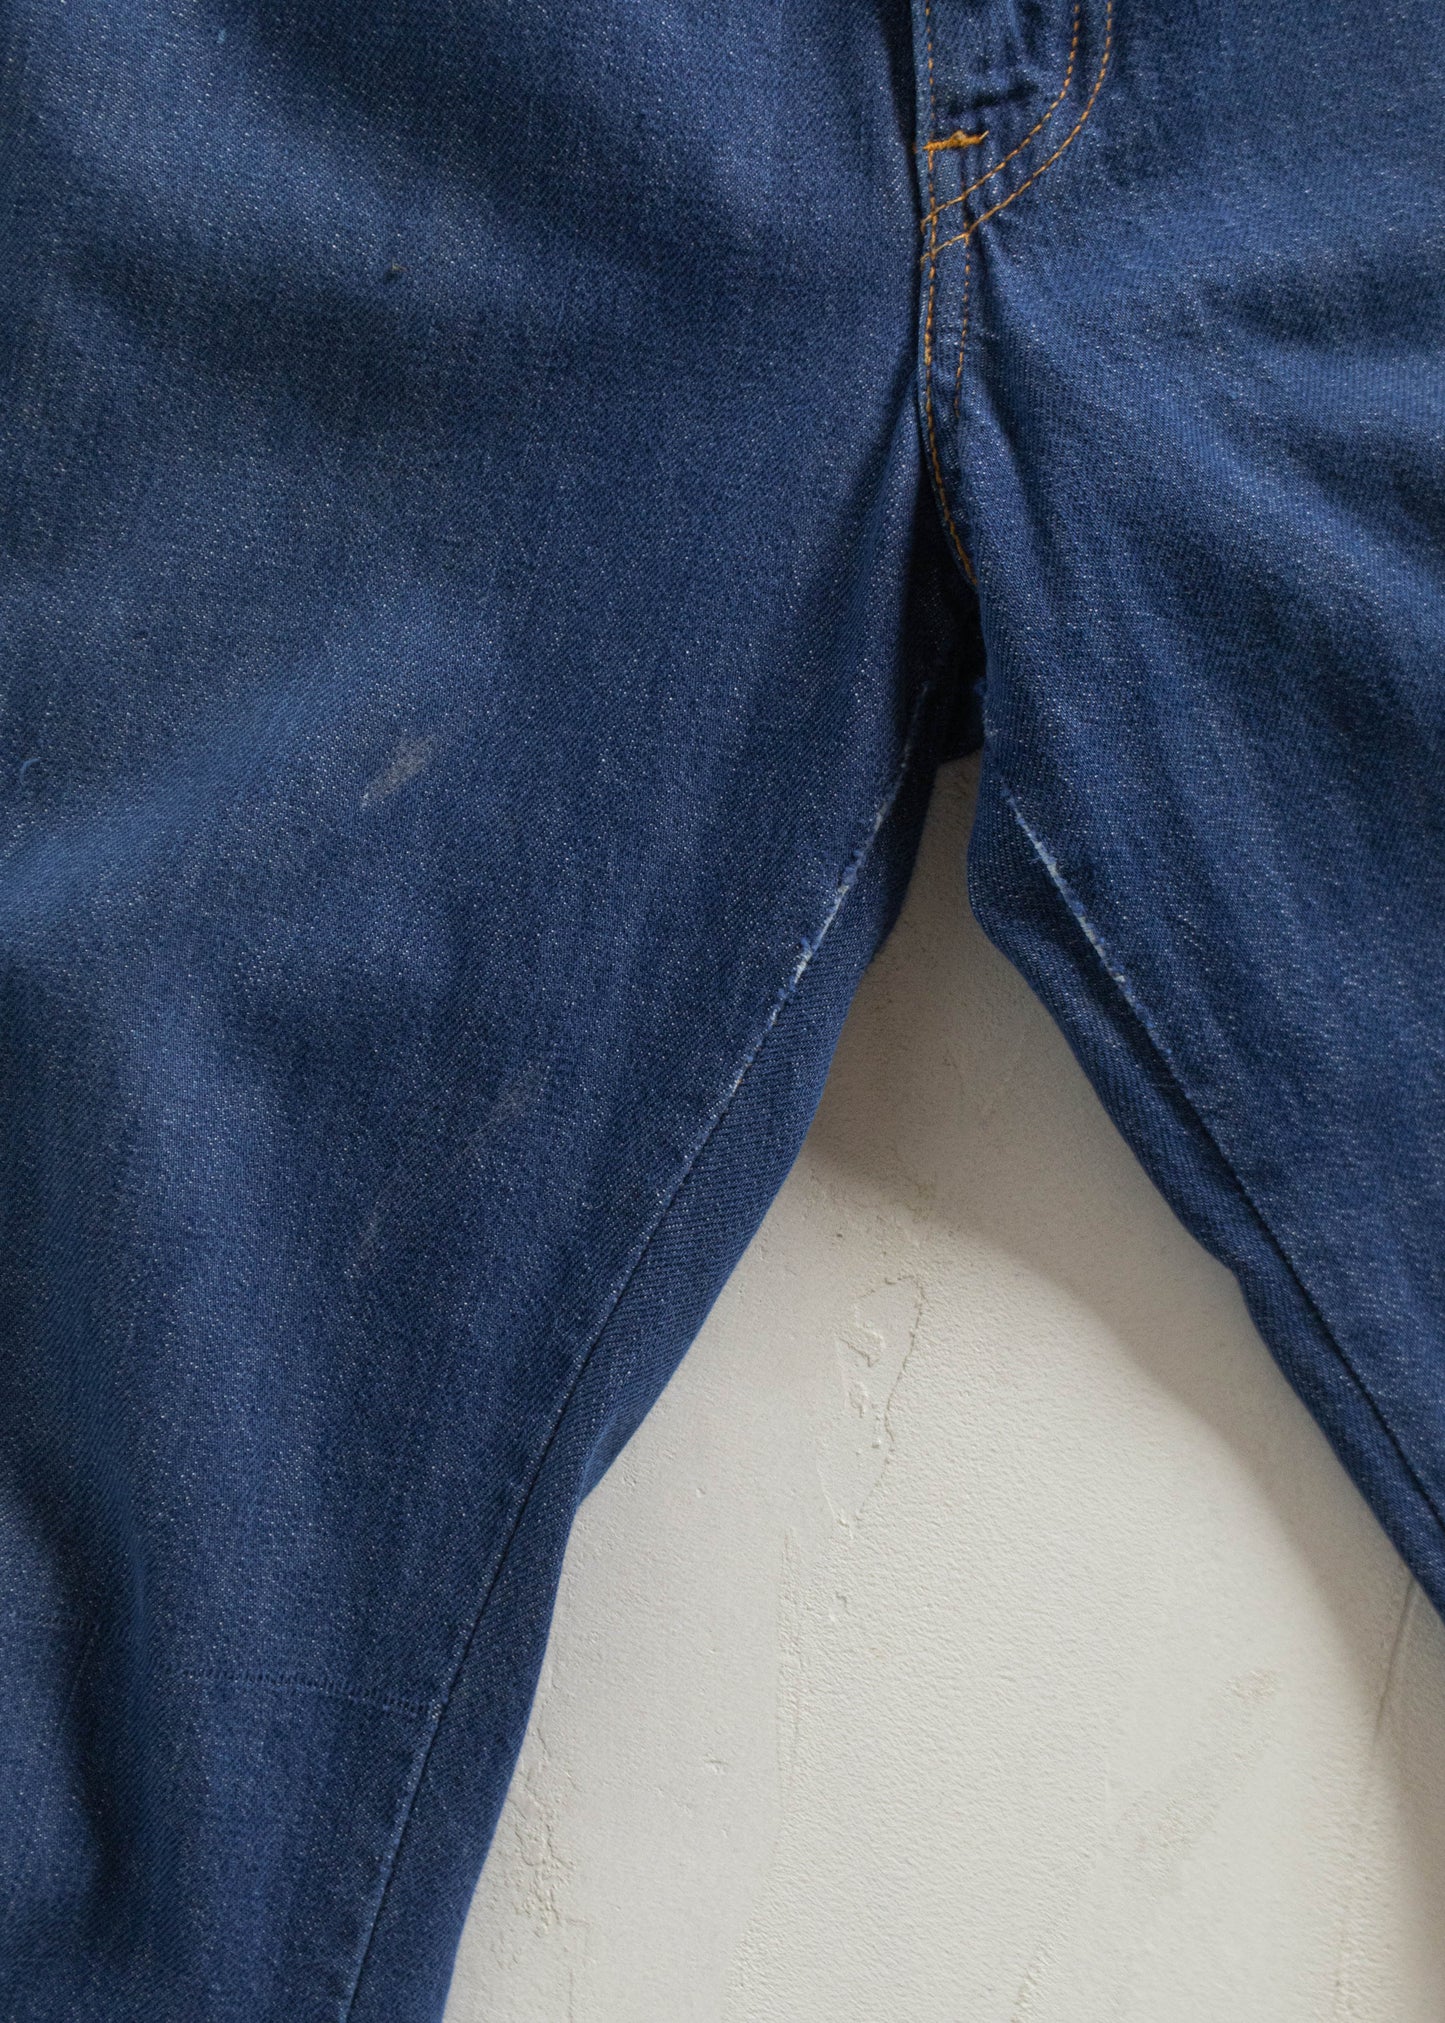 Vintage 1970s Levis Darkwash Flare Jeans Size Women's 24 Men's 28